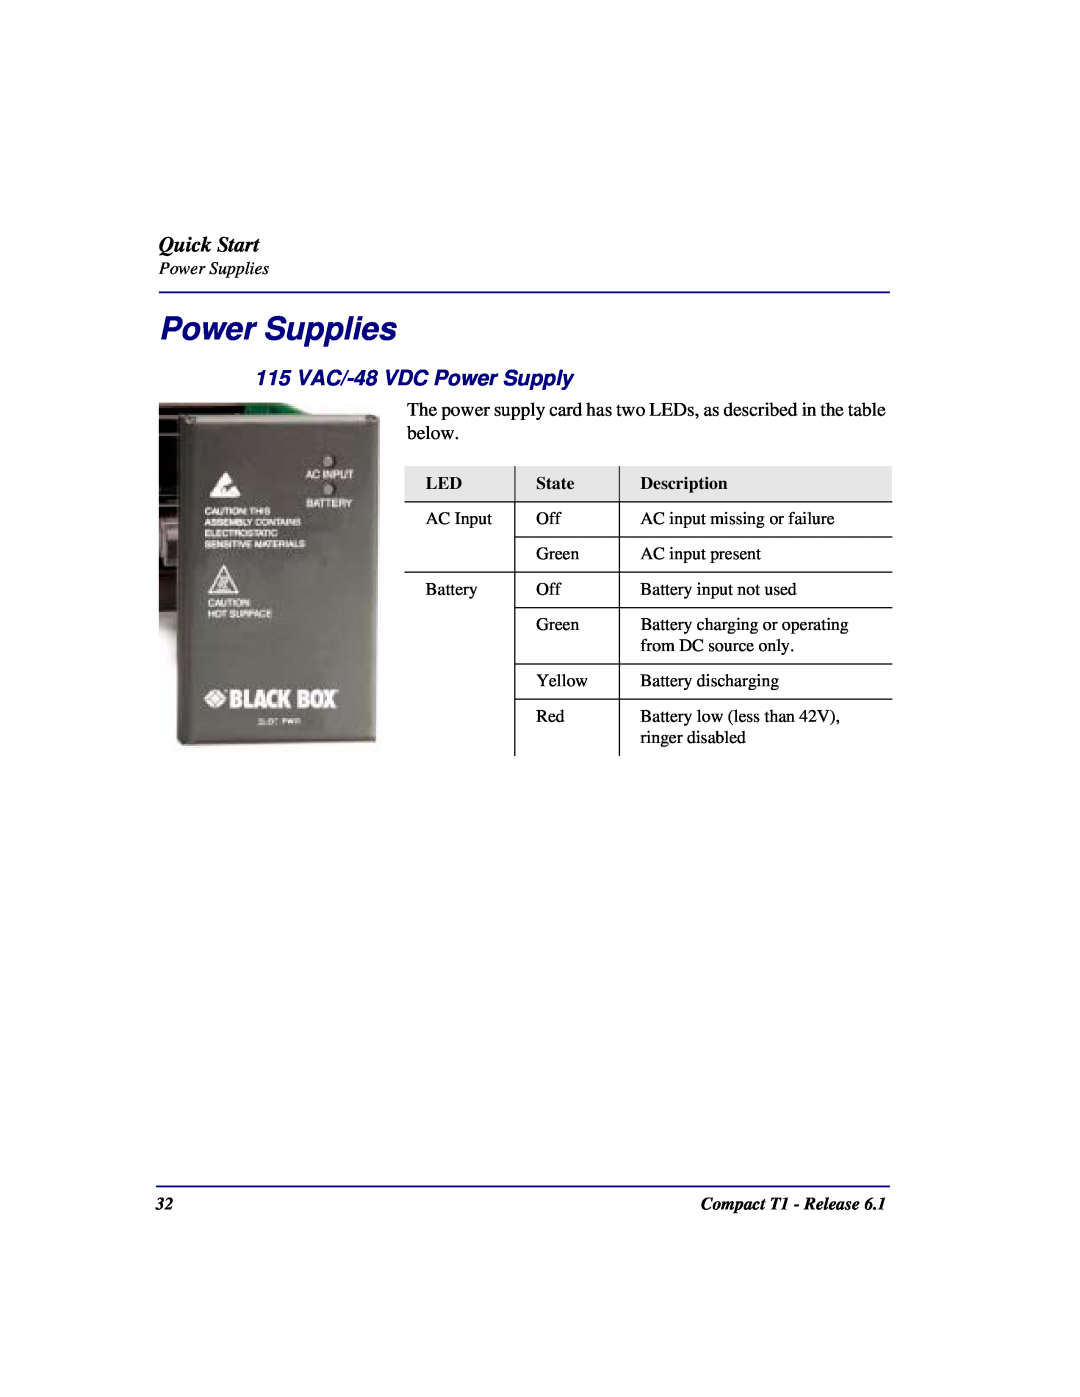 Black Box COMPACT T1 quick start Power Supplies, Quick Start, 115 VAC/-48 VDC Power Supply 